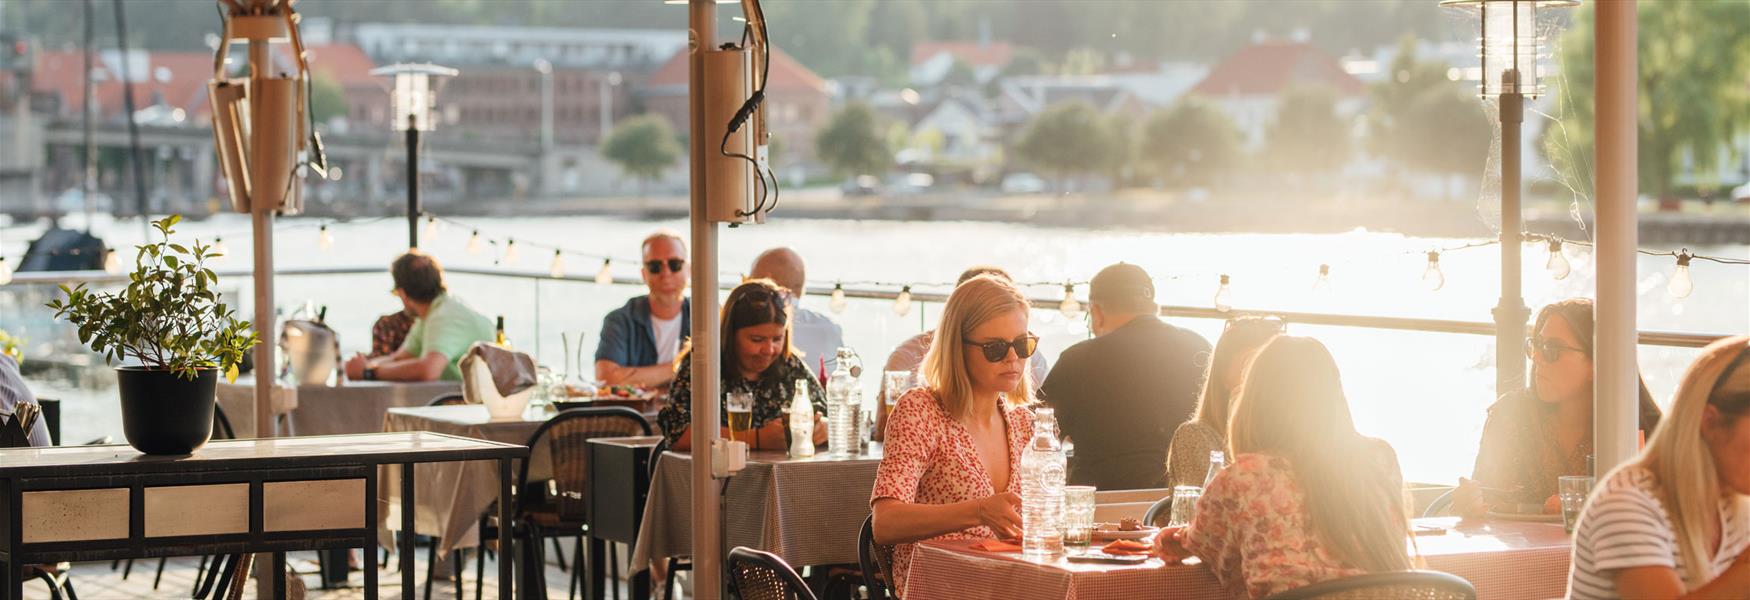 people sitting at an outdoor restaurant in Porsgrunn